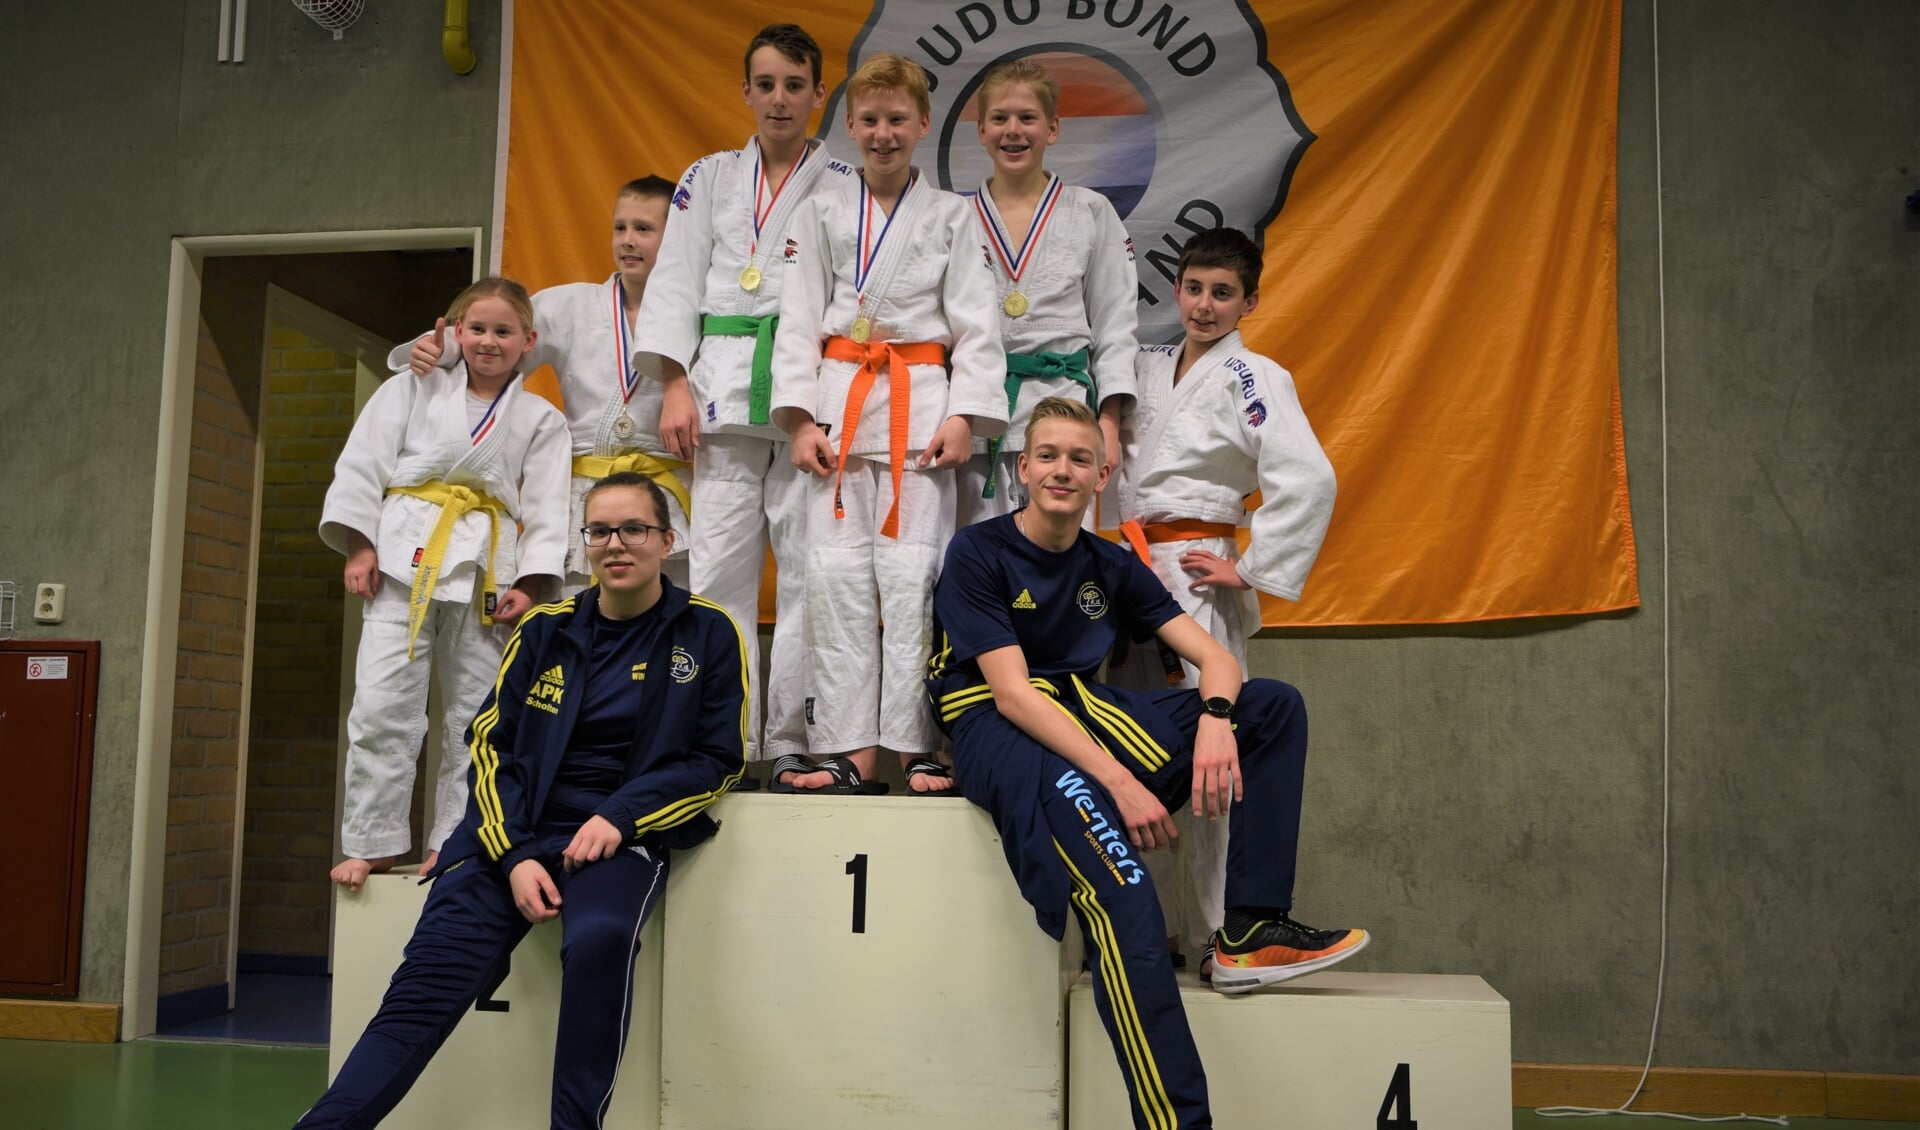 e Winterswijkse judoka's presteren goed. Foto: PR 